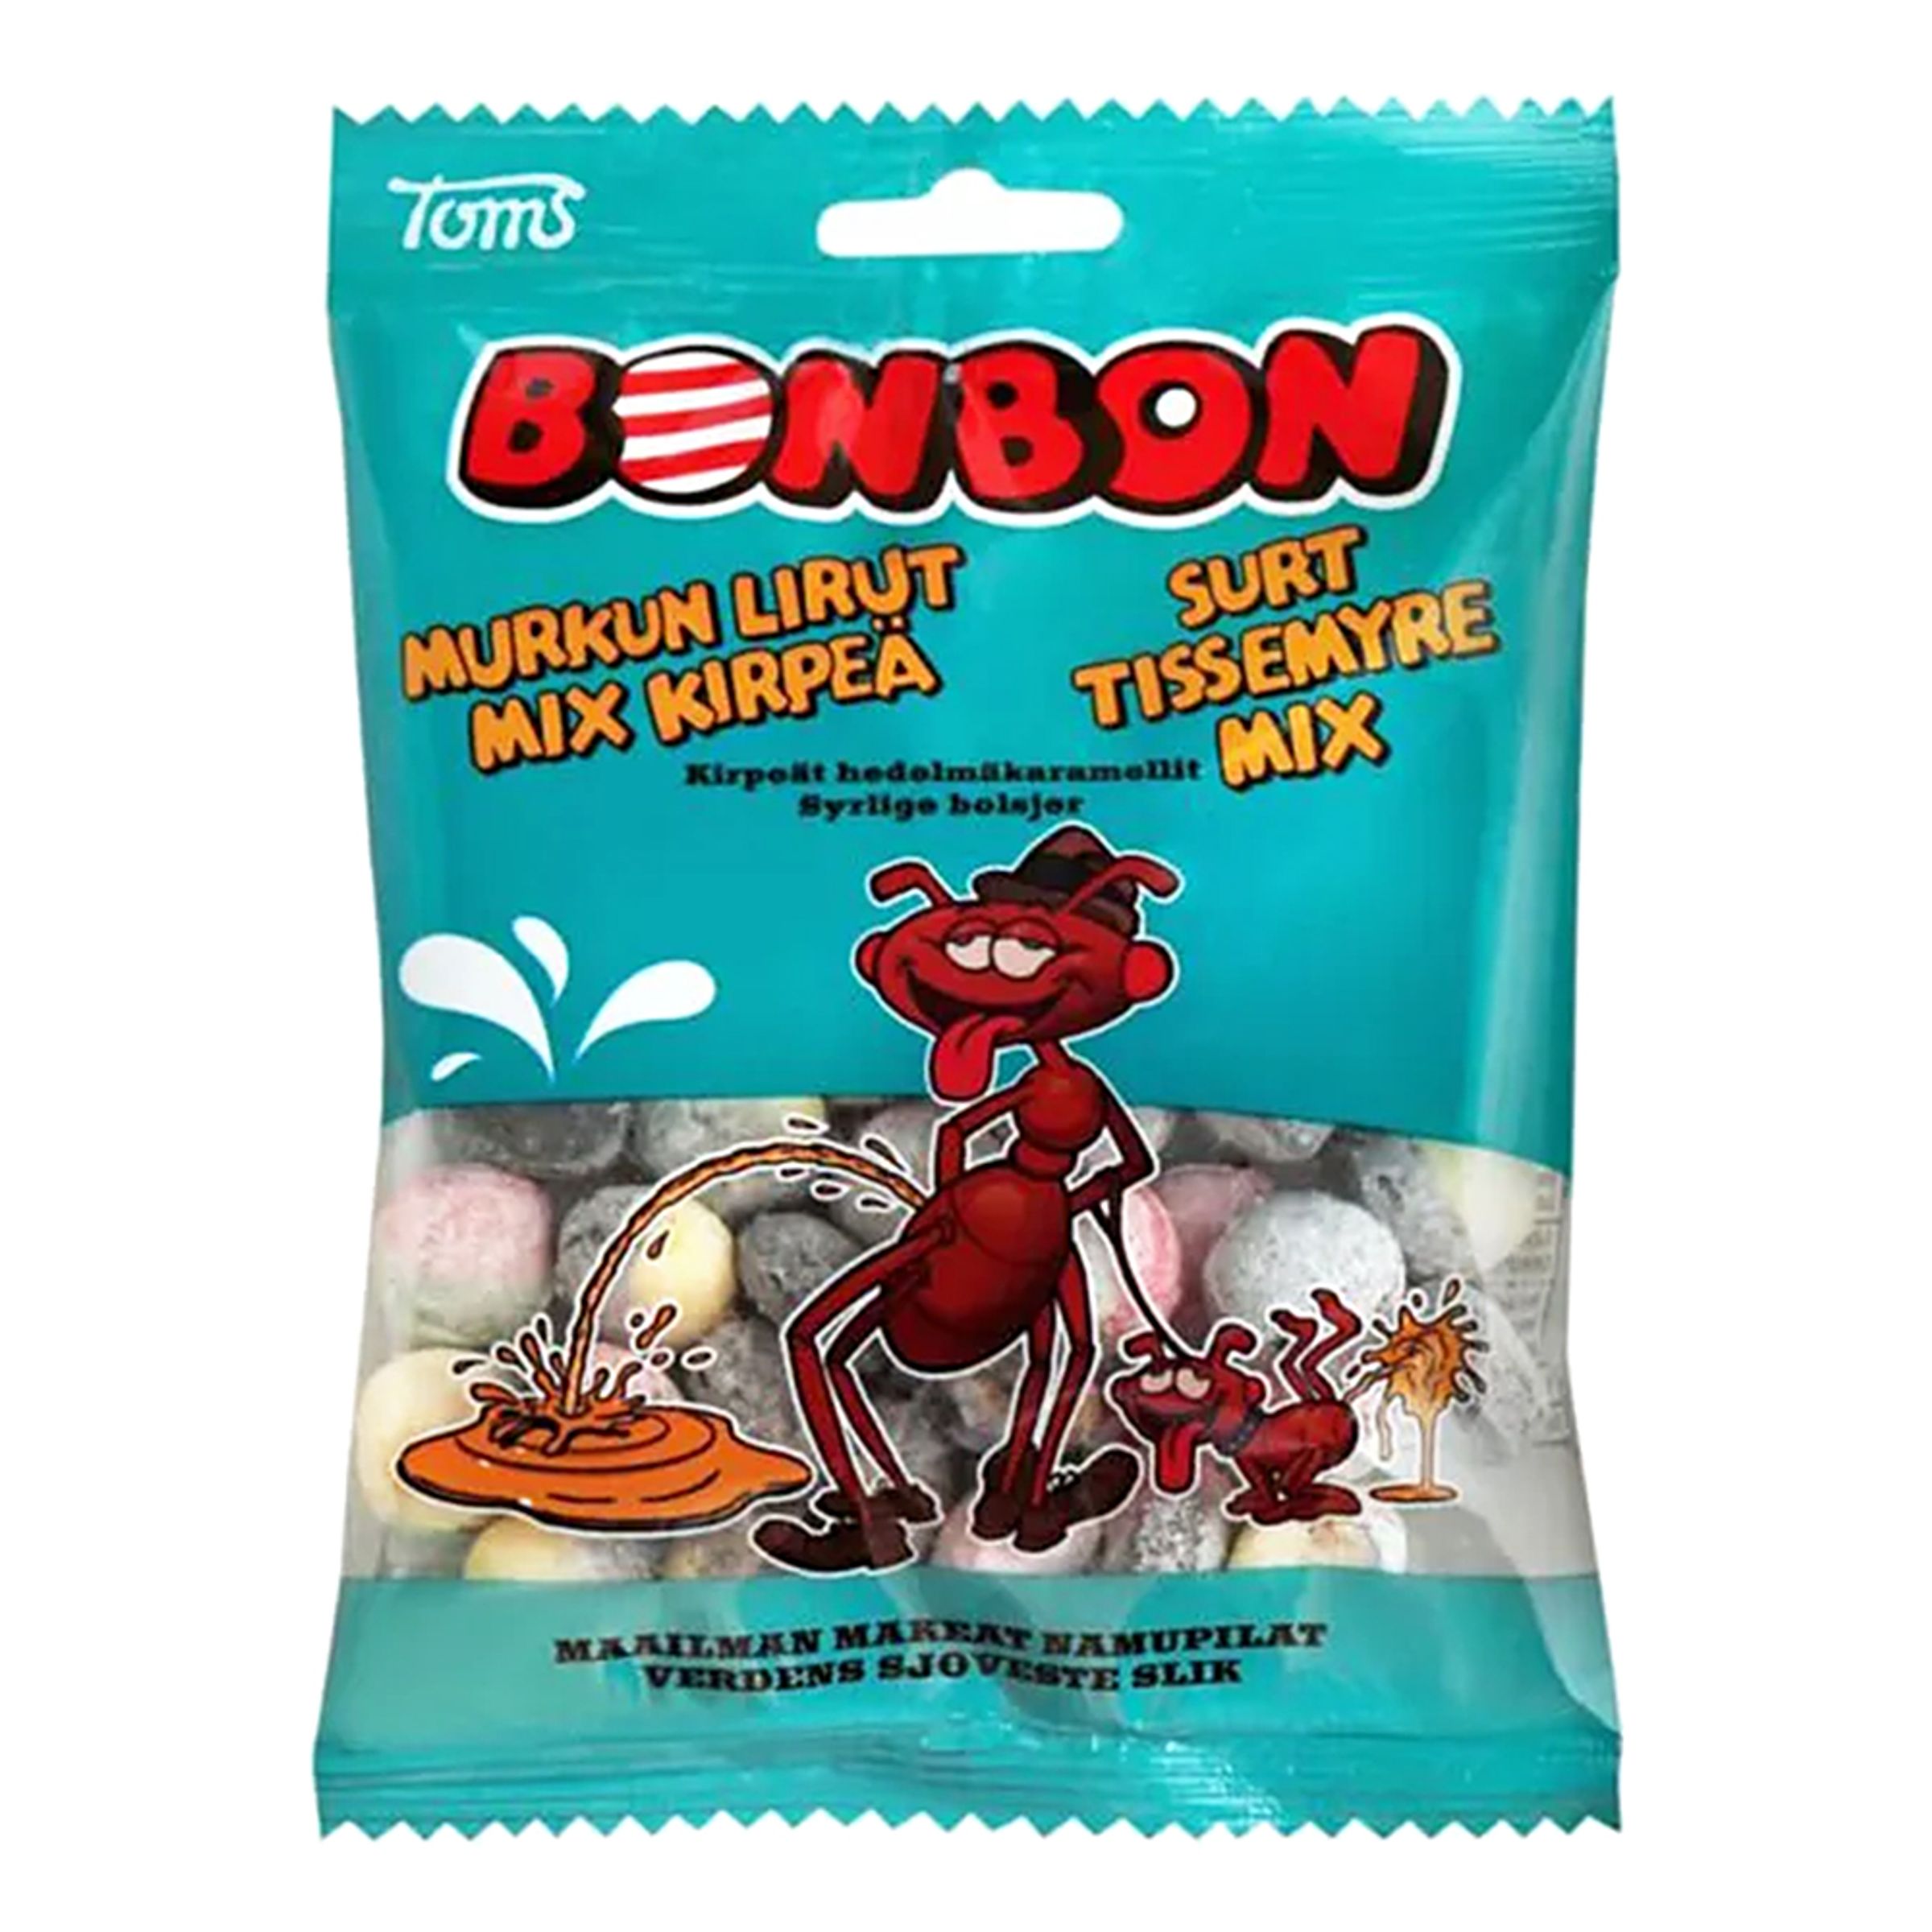 BonBon Sura Tissemyre Mix - 125 gram